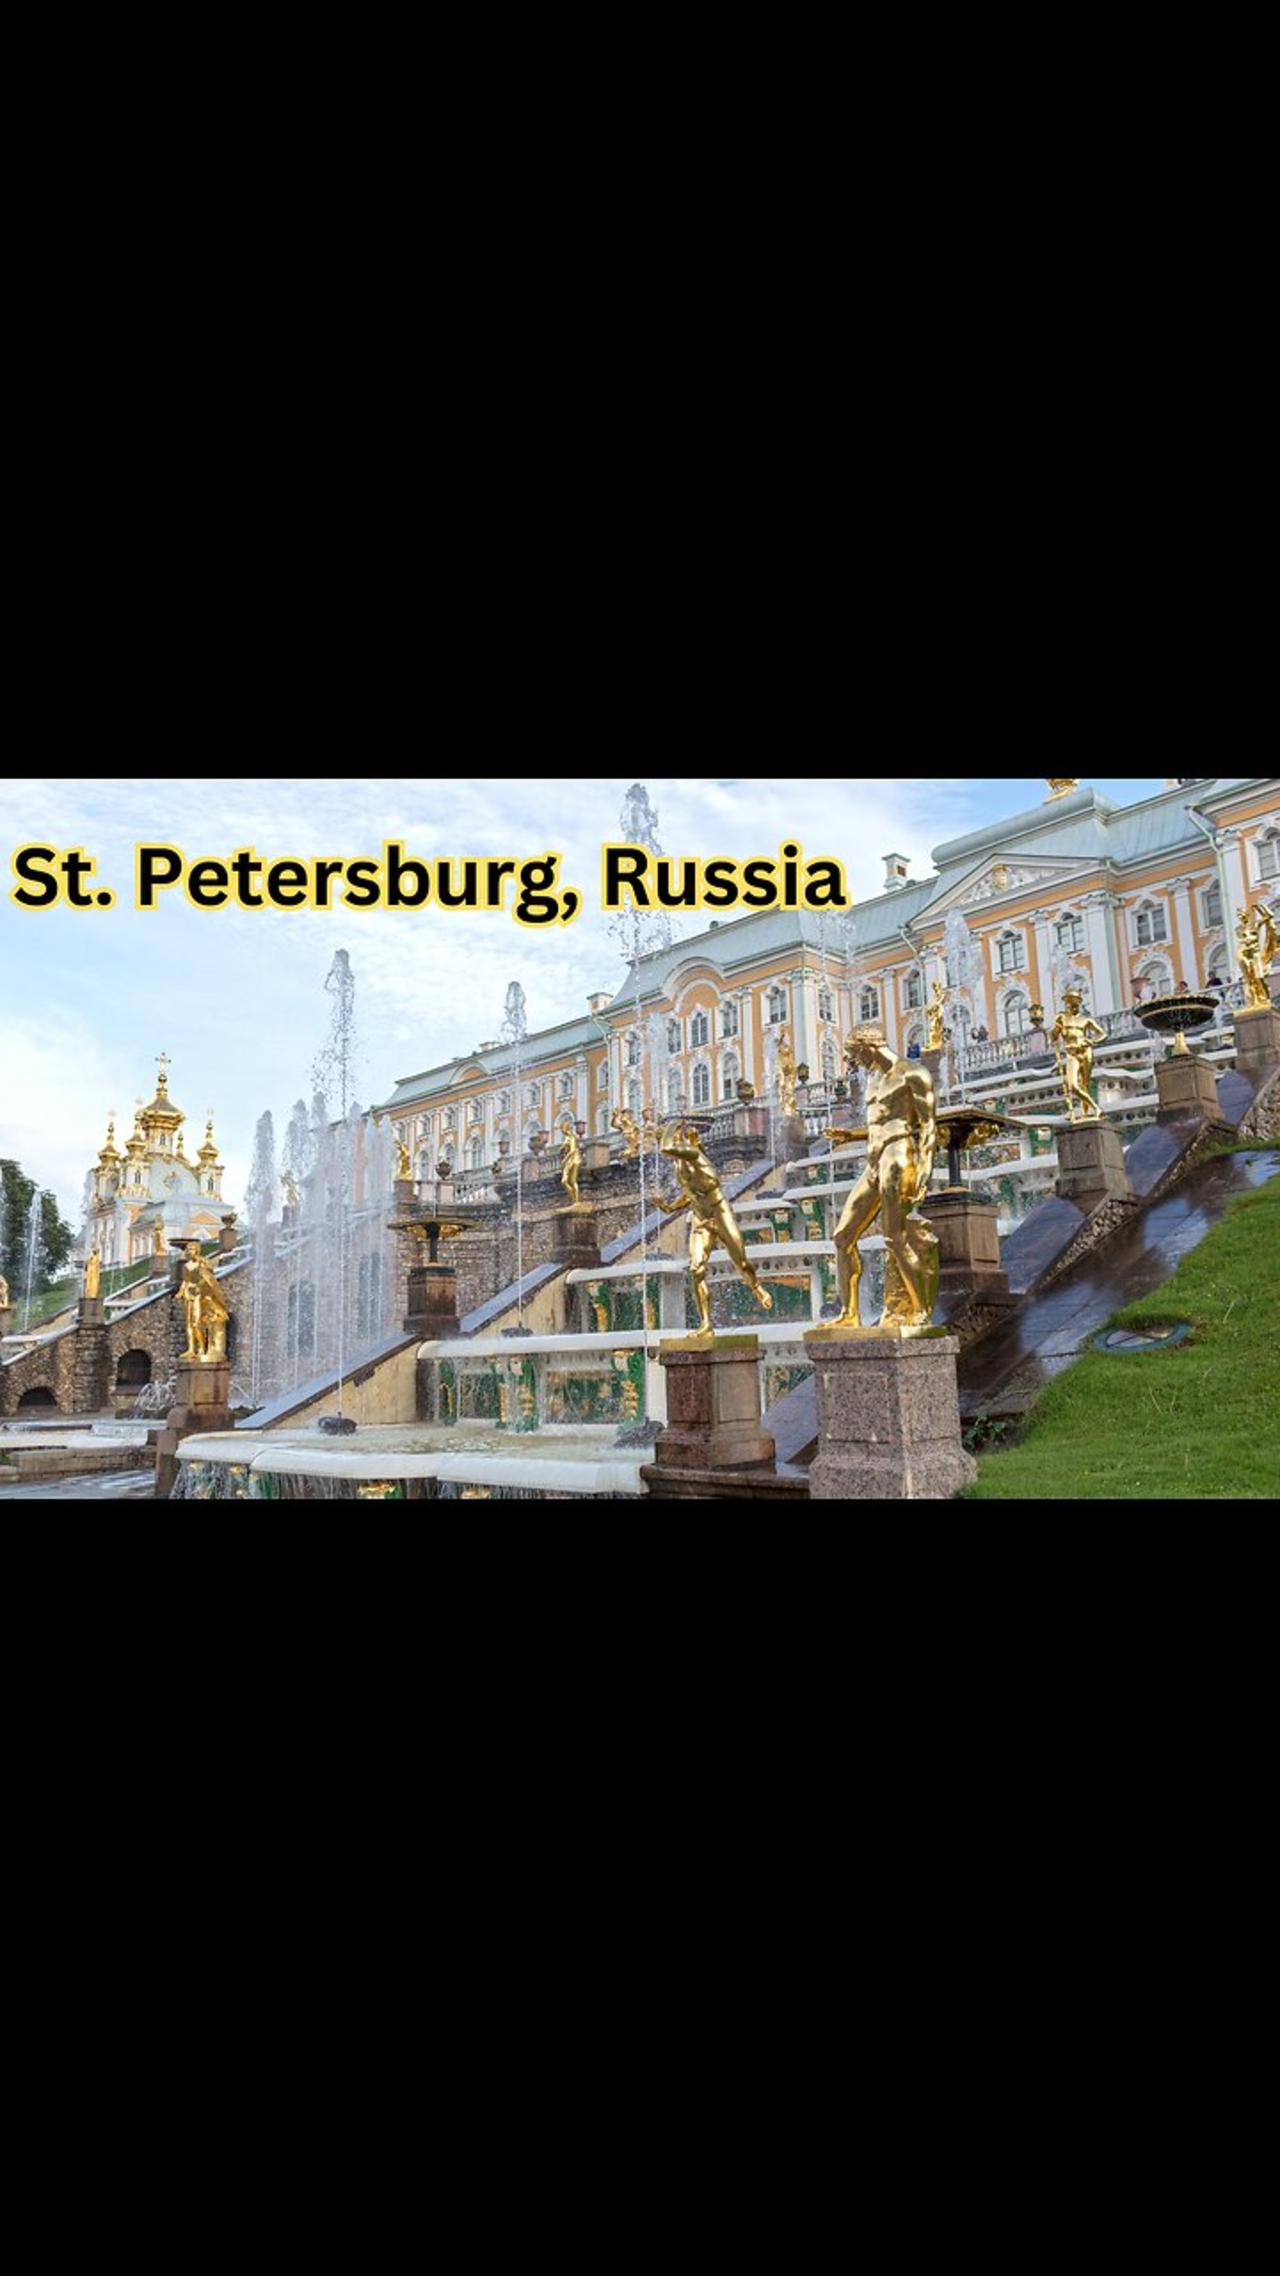 Enchanting Beauty of St. Petersburg, Russia